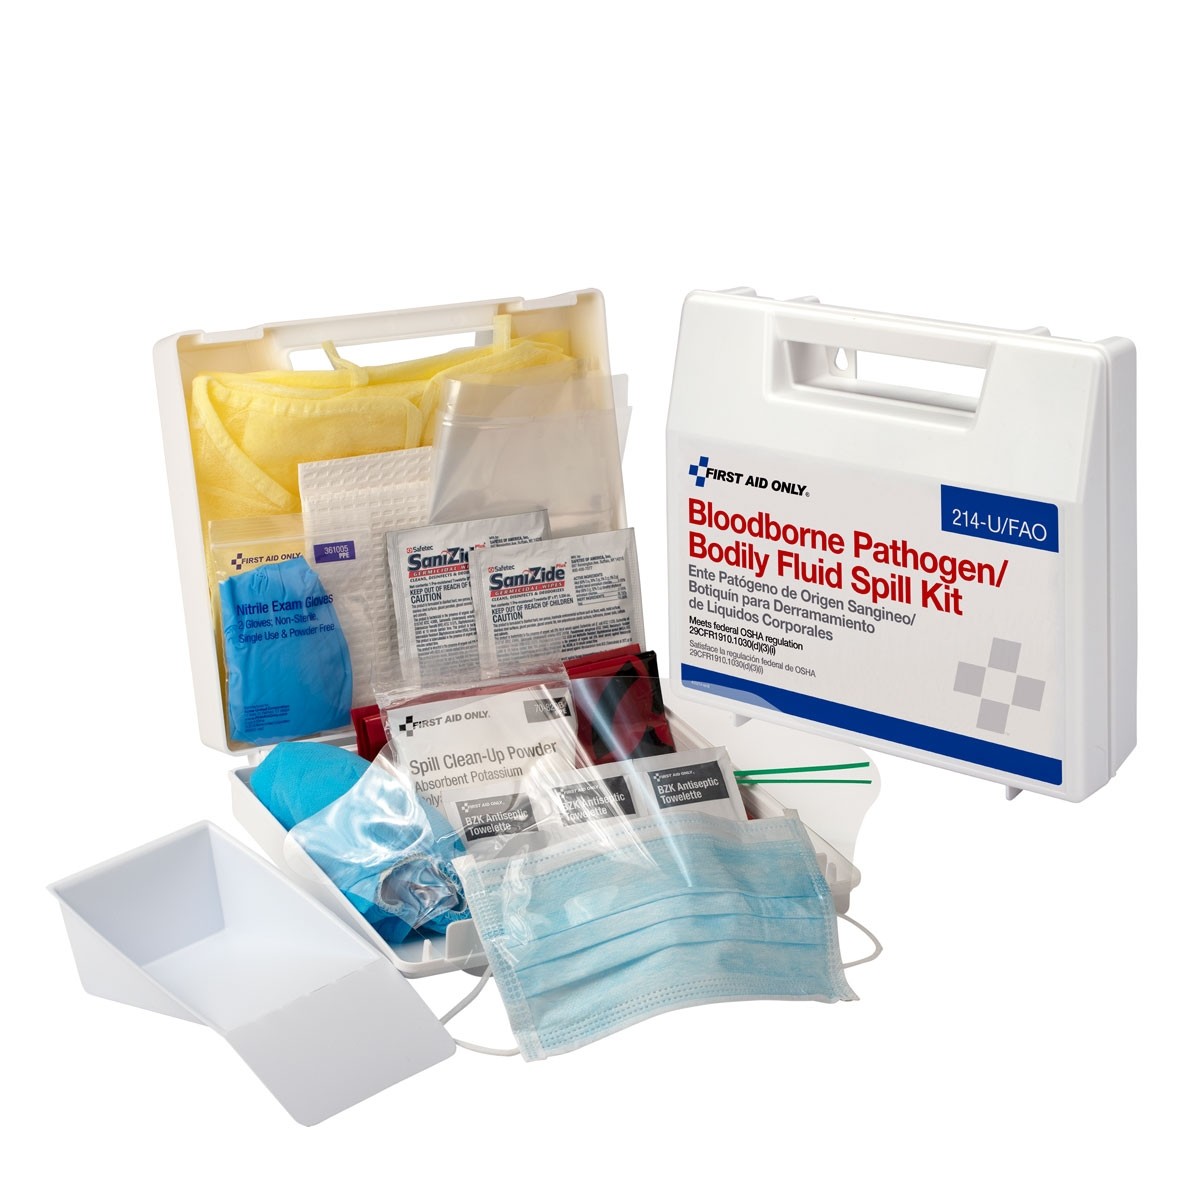 First Aid Only 214-U/FAO Bloodborne Pathogen/Bodily Fluid Spill Kit